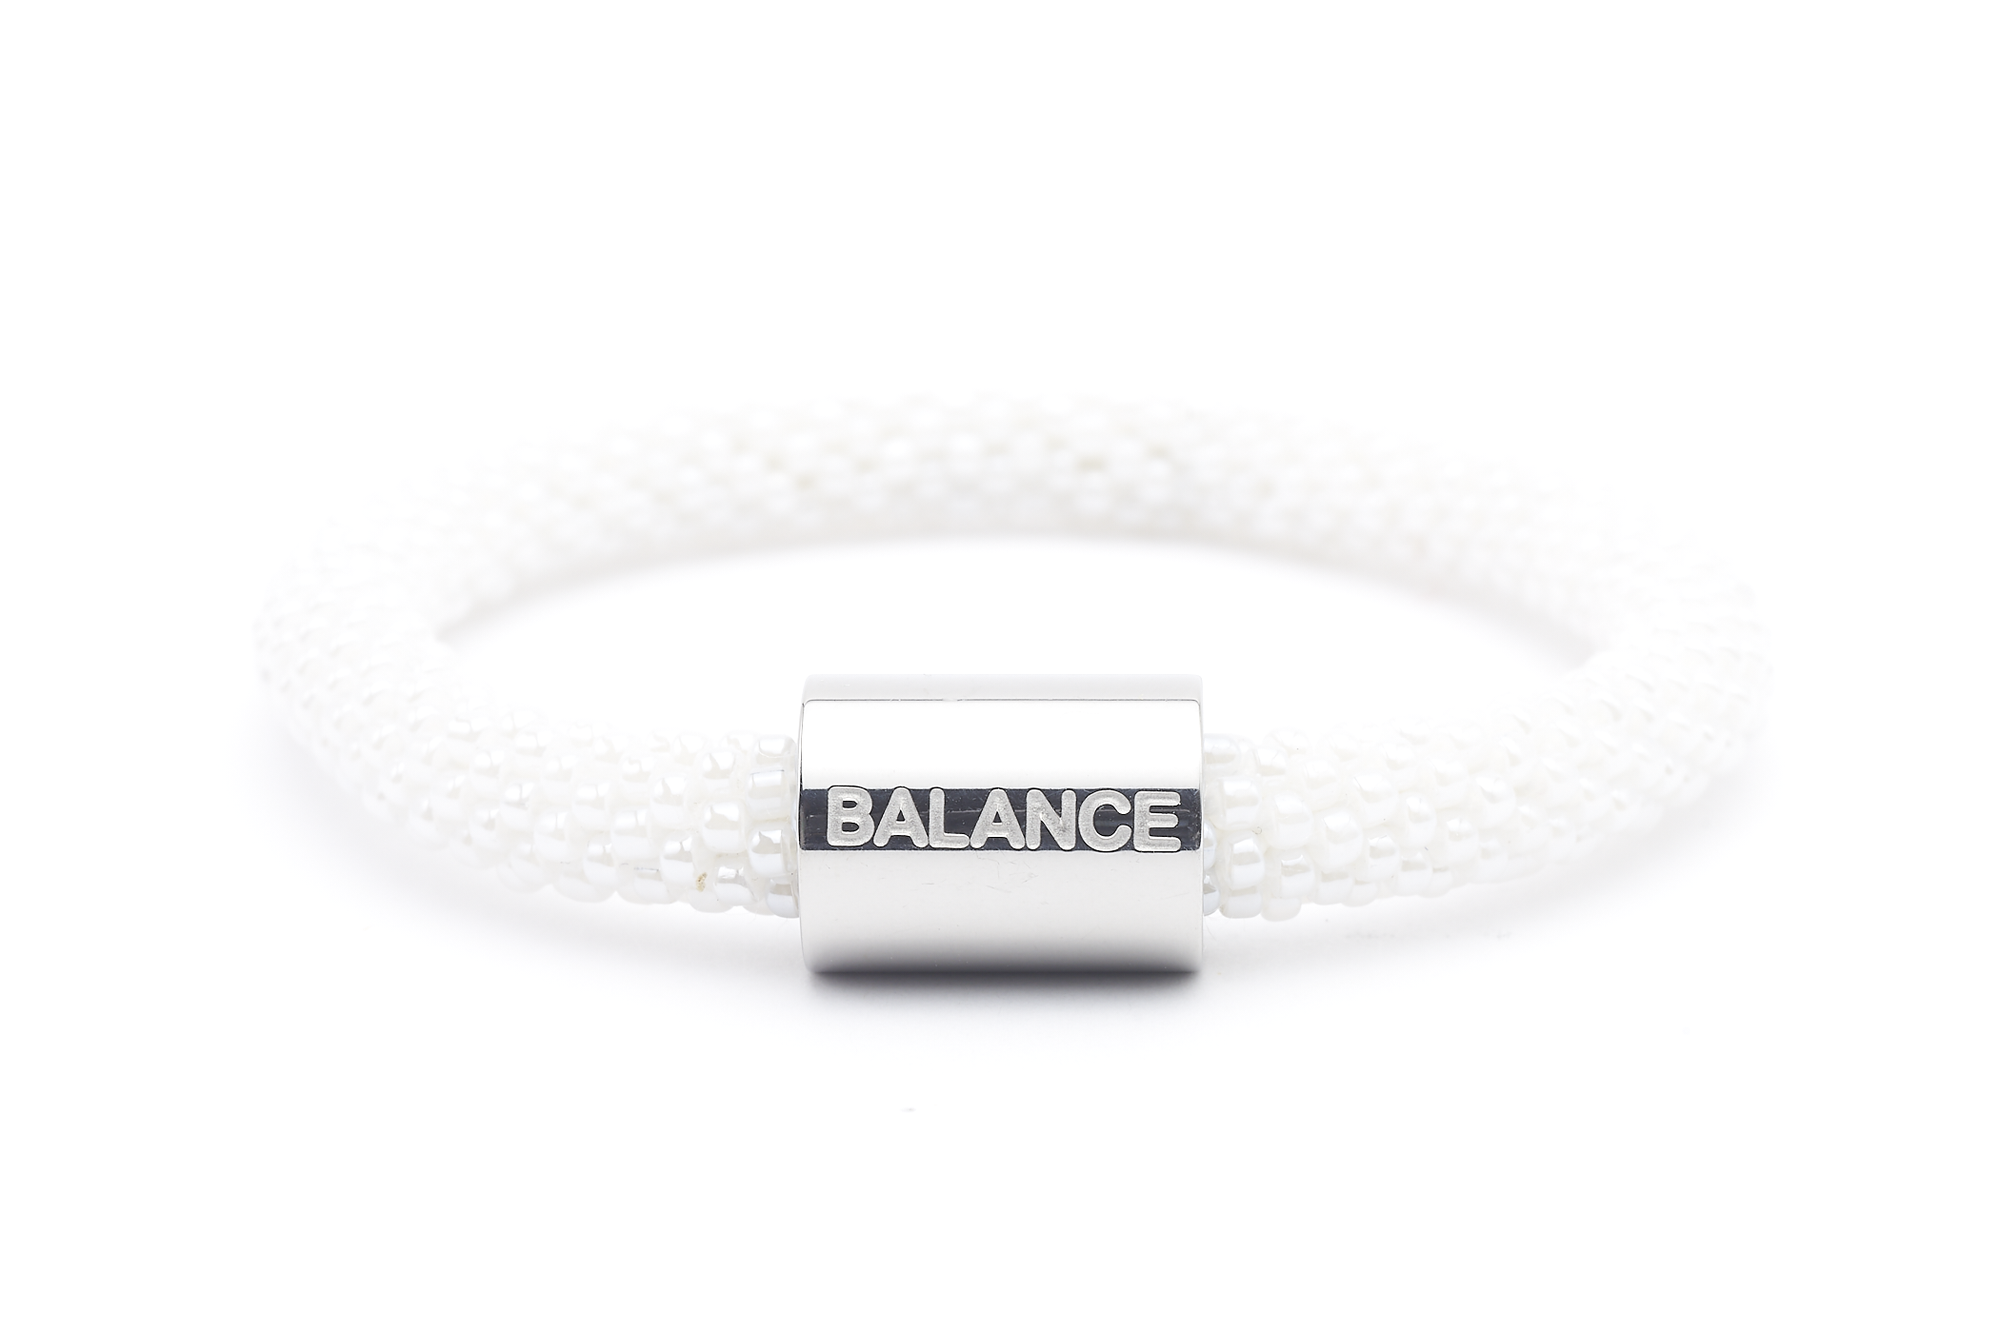 Sashka Co. Charm Bracelet White w/ Silver Balance Charm Balance Charm Bracelet